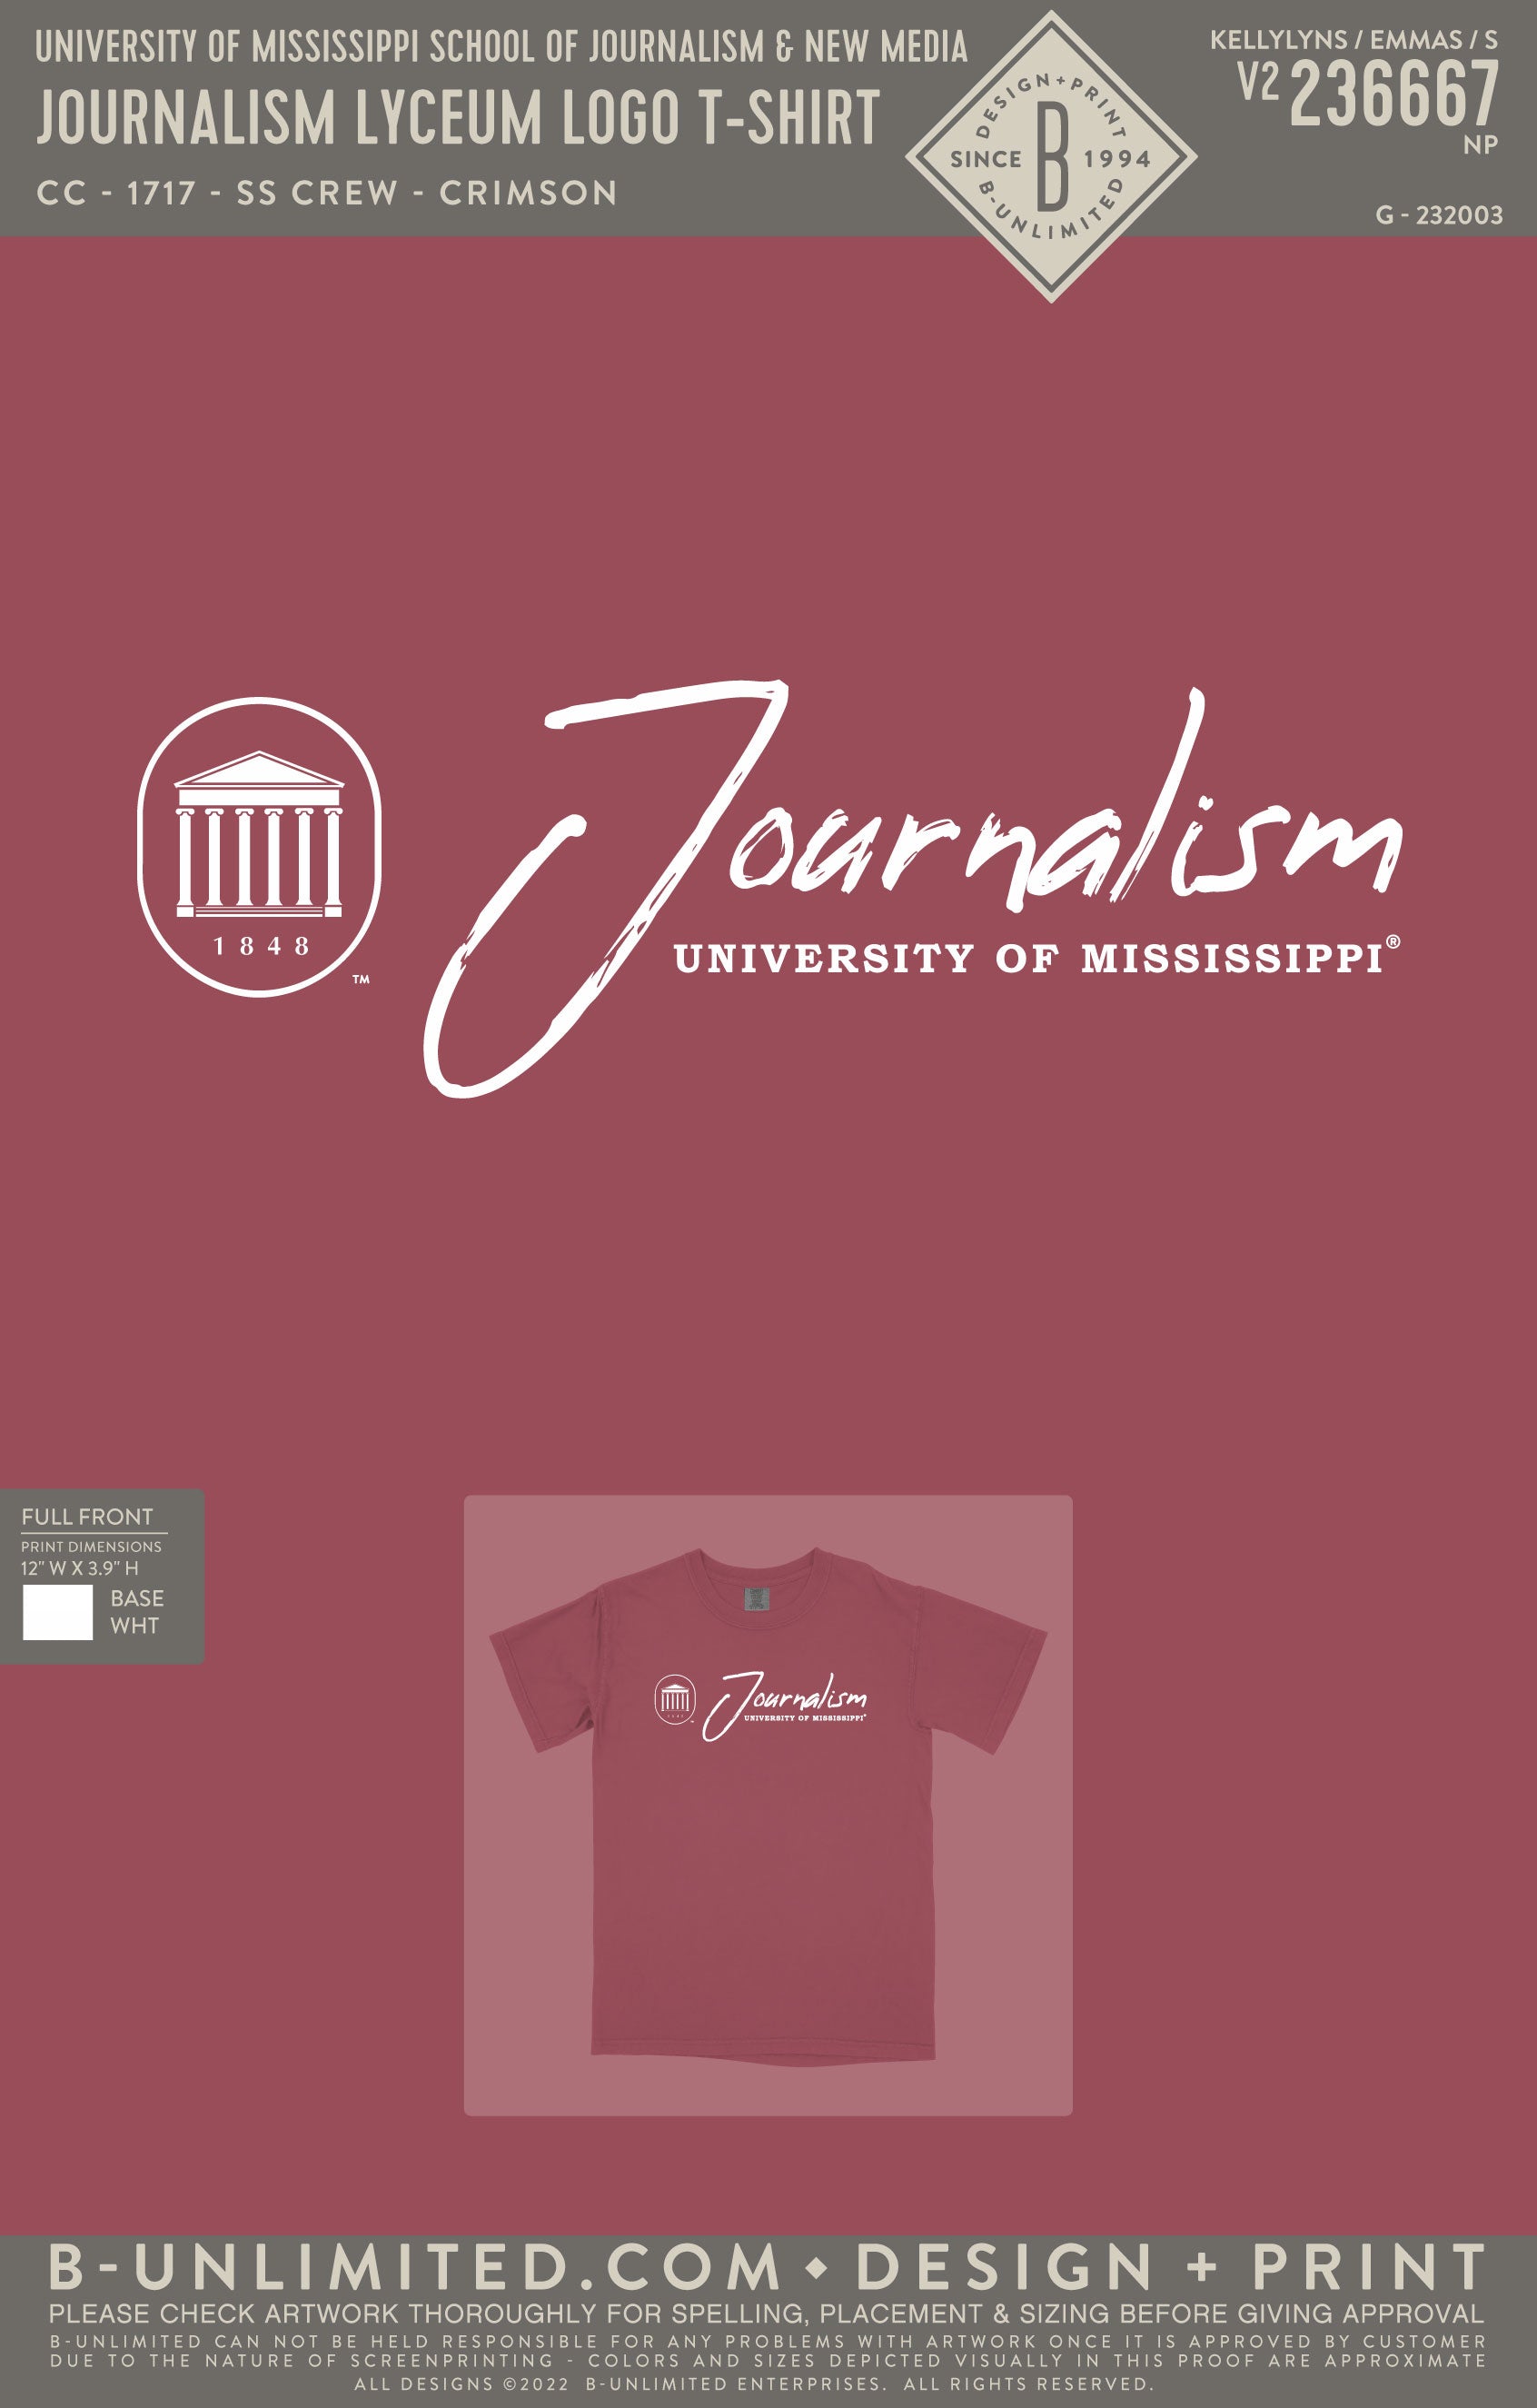 University of Mississippi School of Journalism & New Media - Journalism Lyceum Logo T-Shirt - CC - 1717 - SS Crew - Crimson